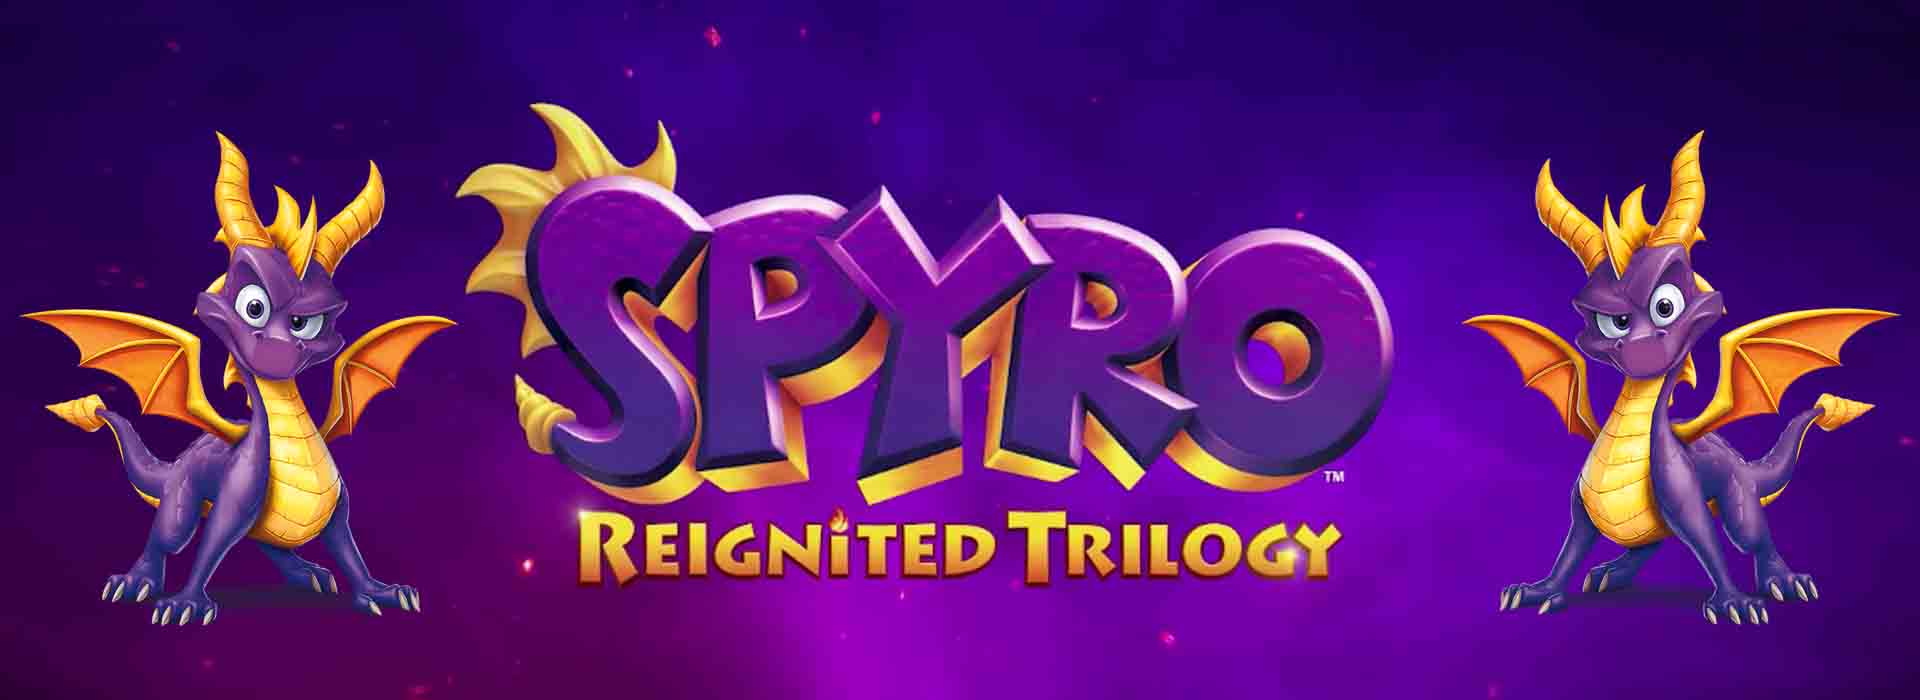 new spyro game xbox